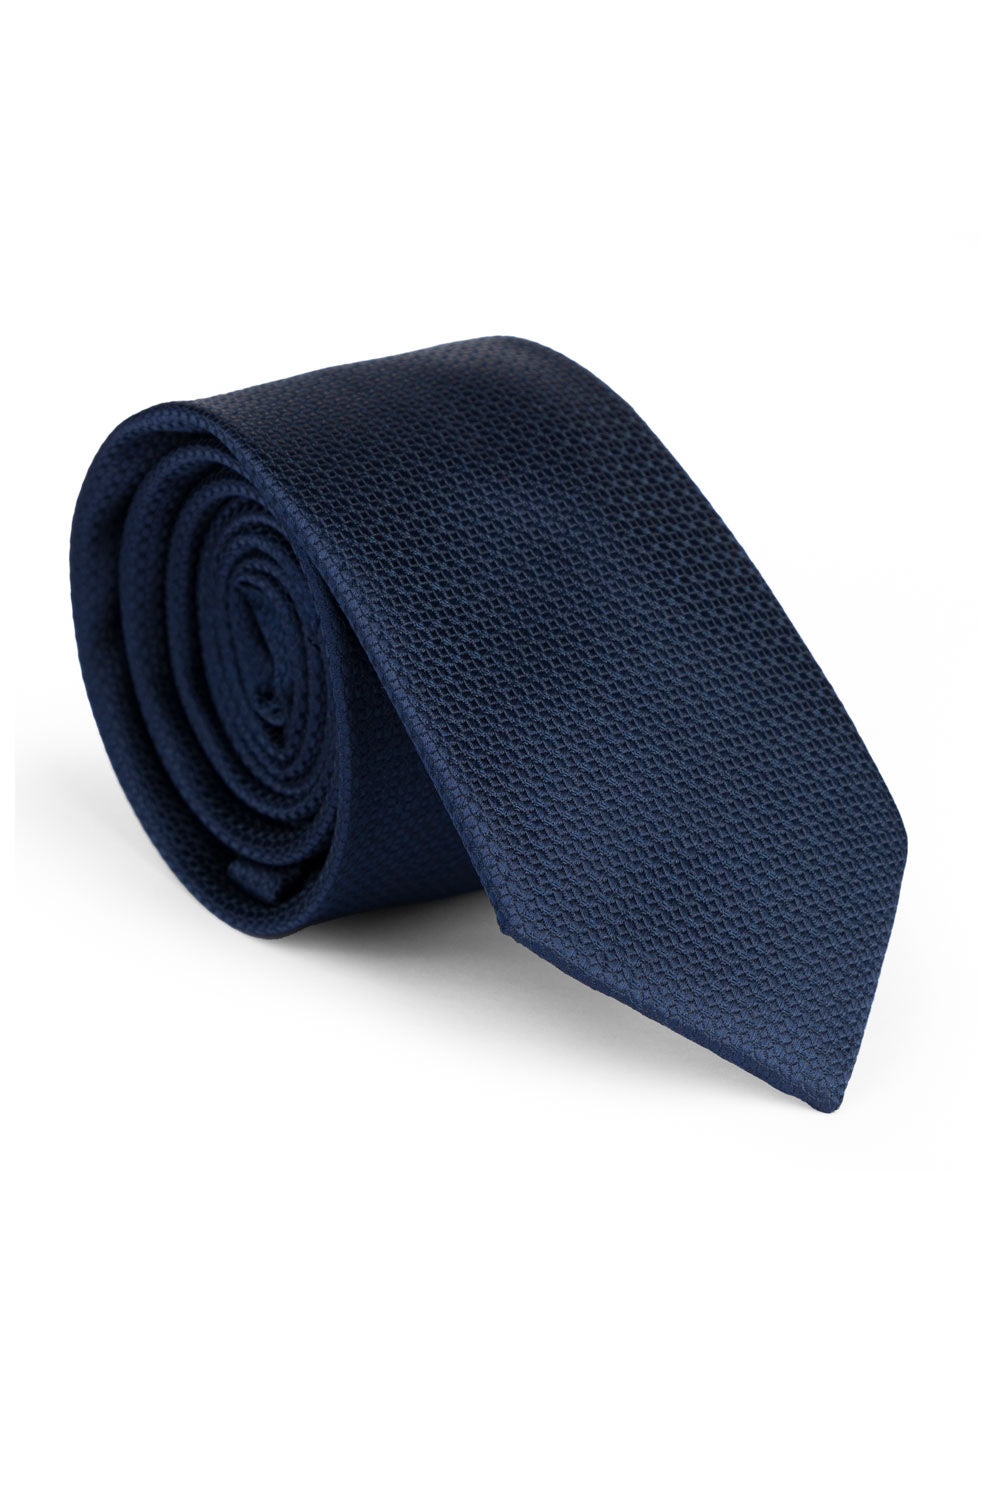 RT Texture Tie